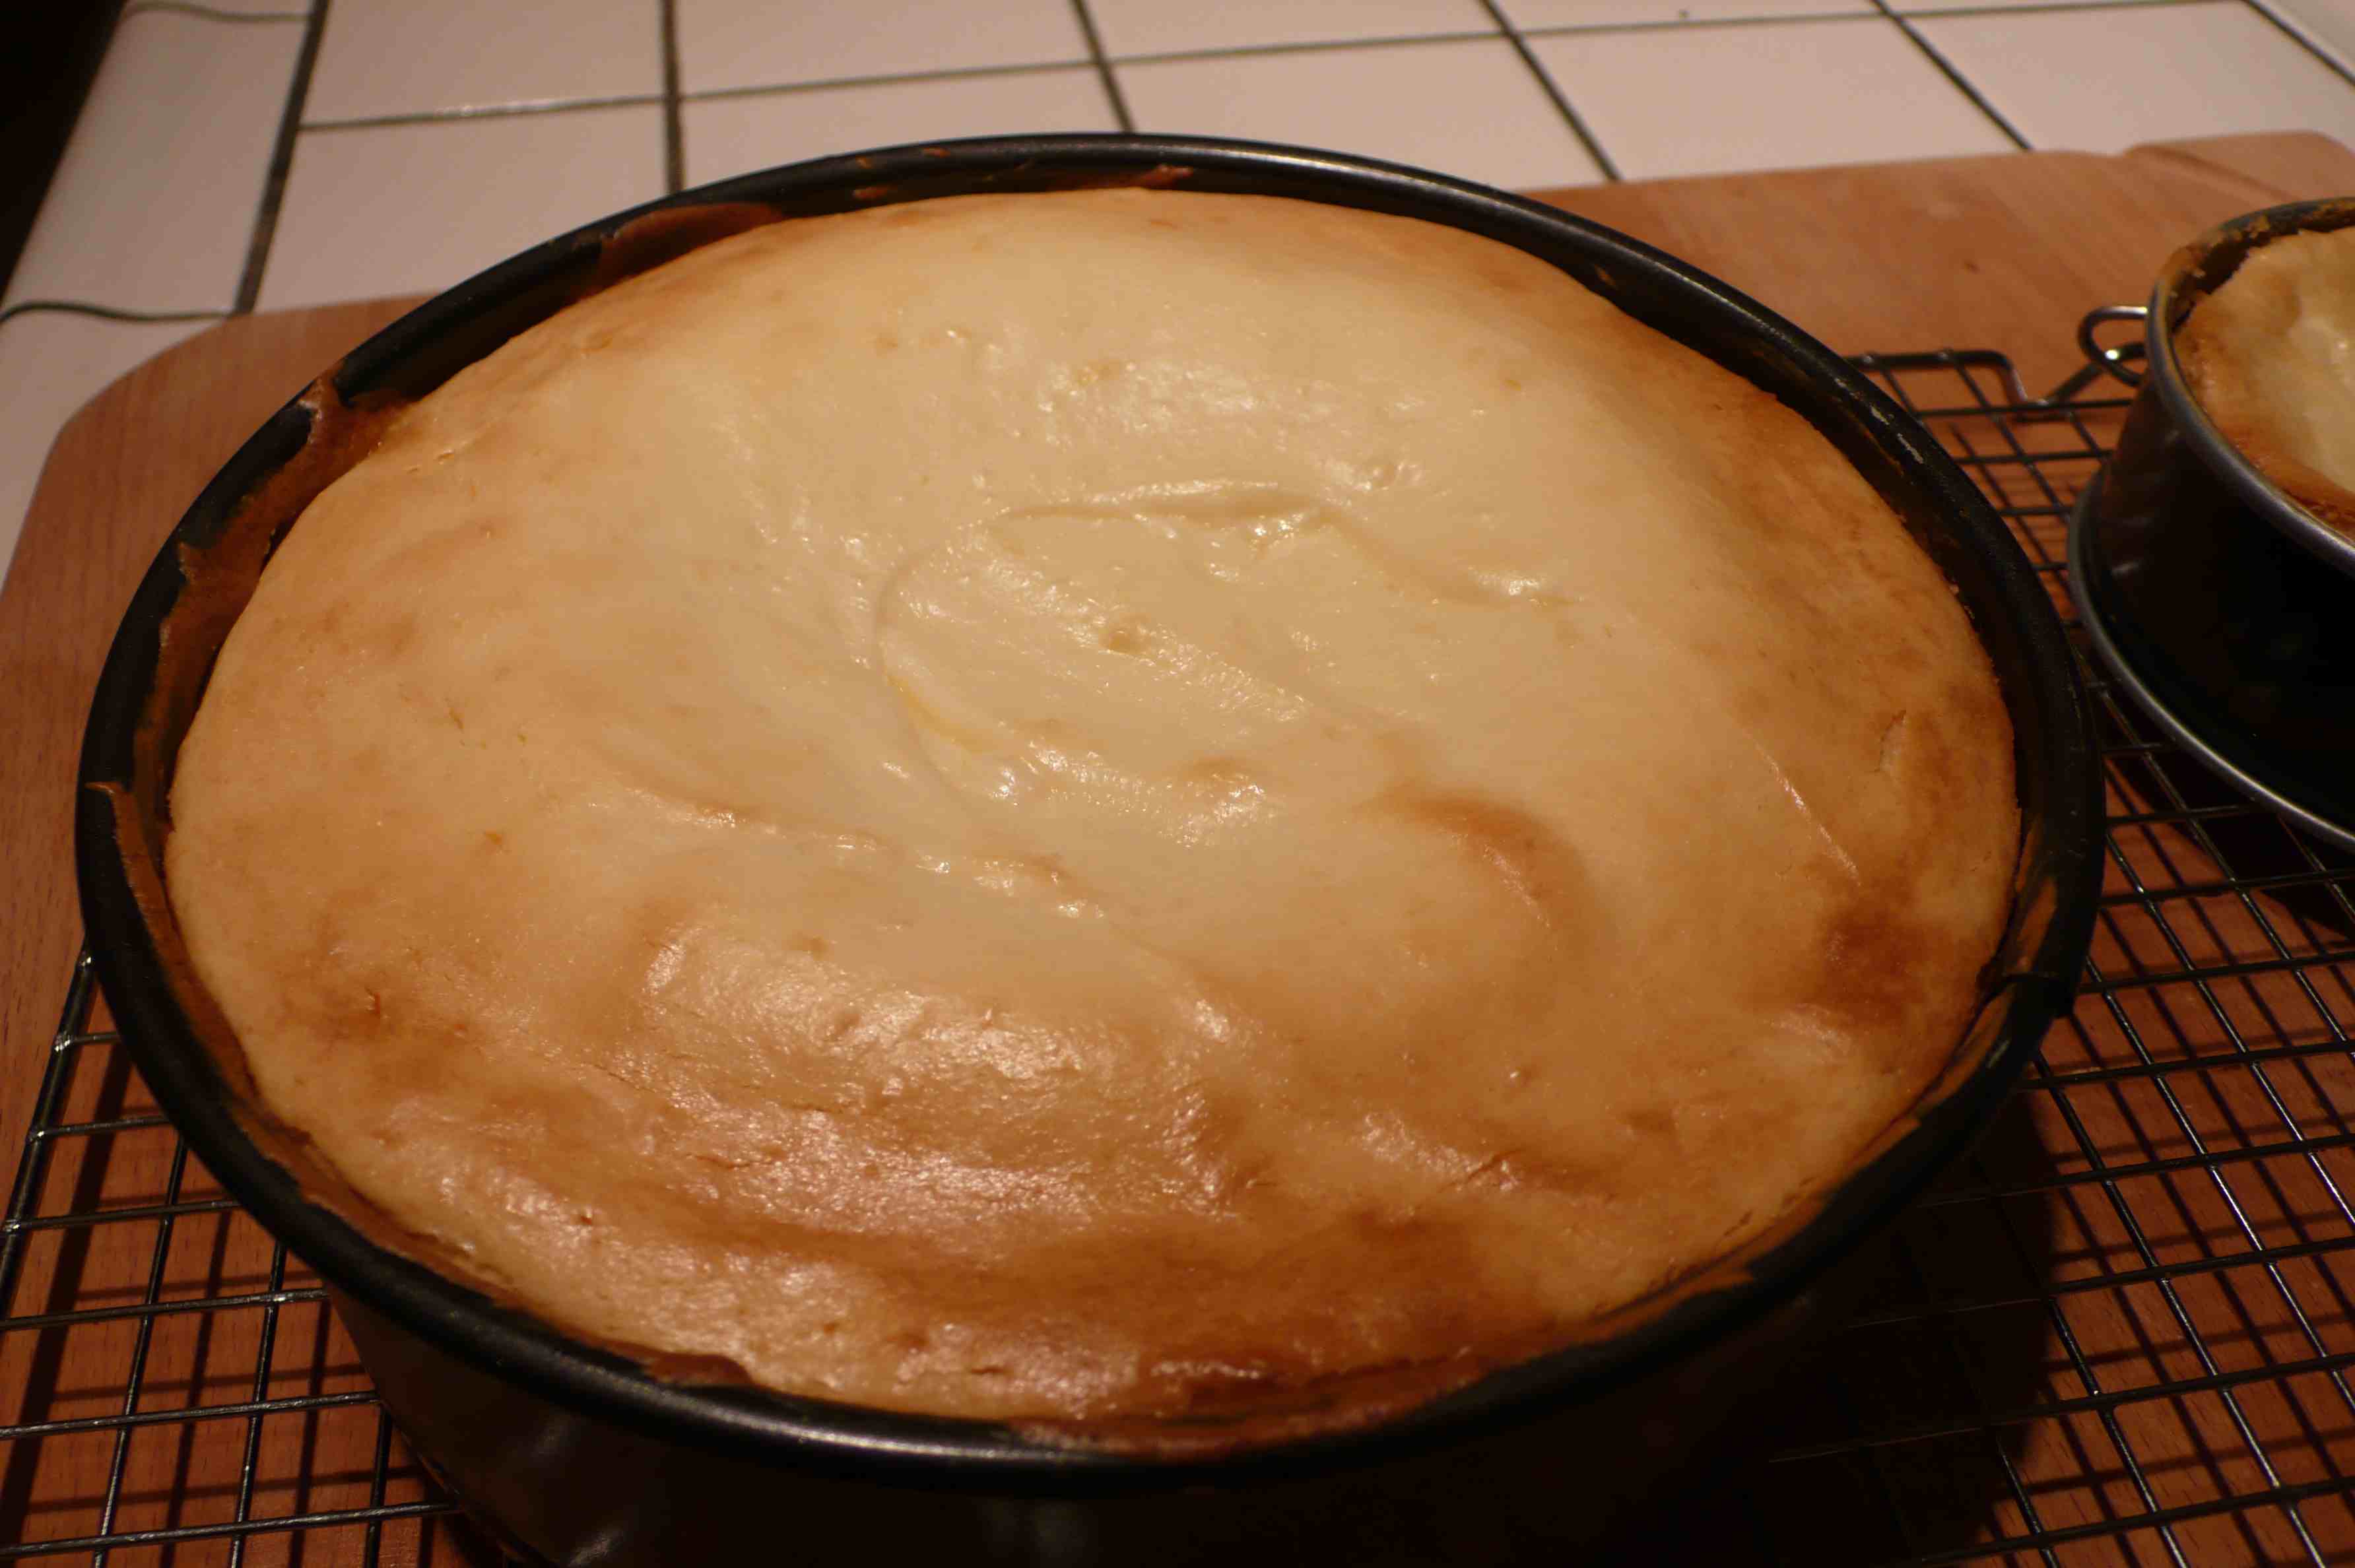 Yum.  Cooling cheesecake.